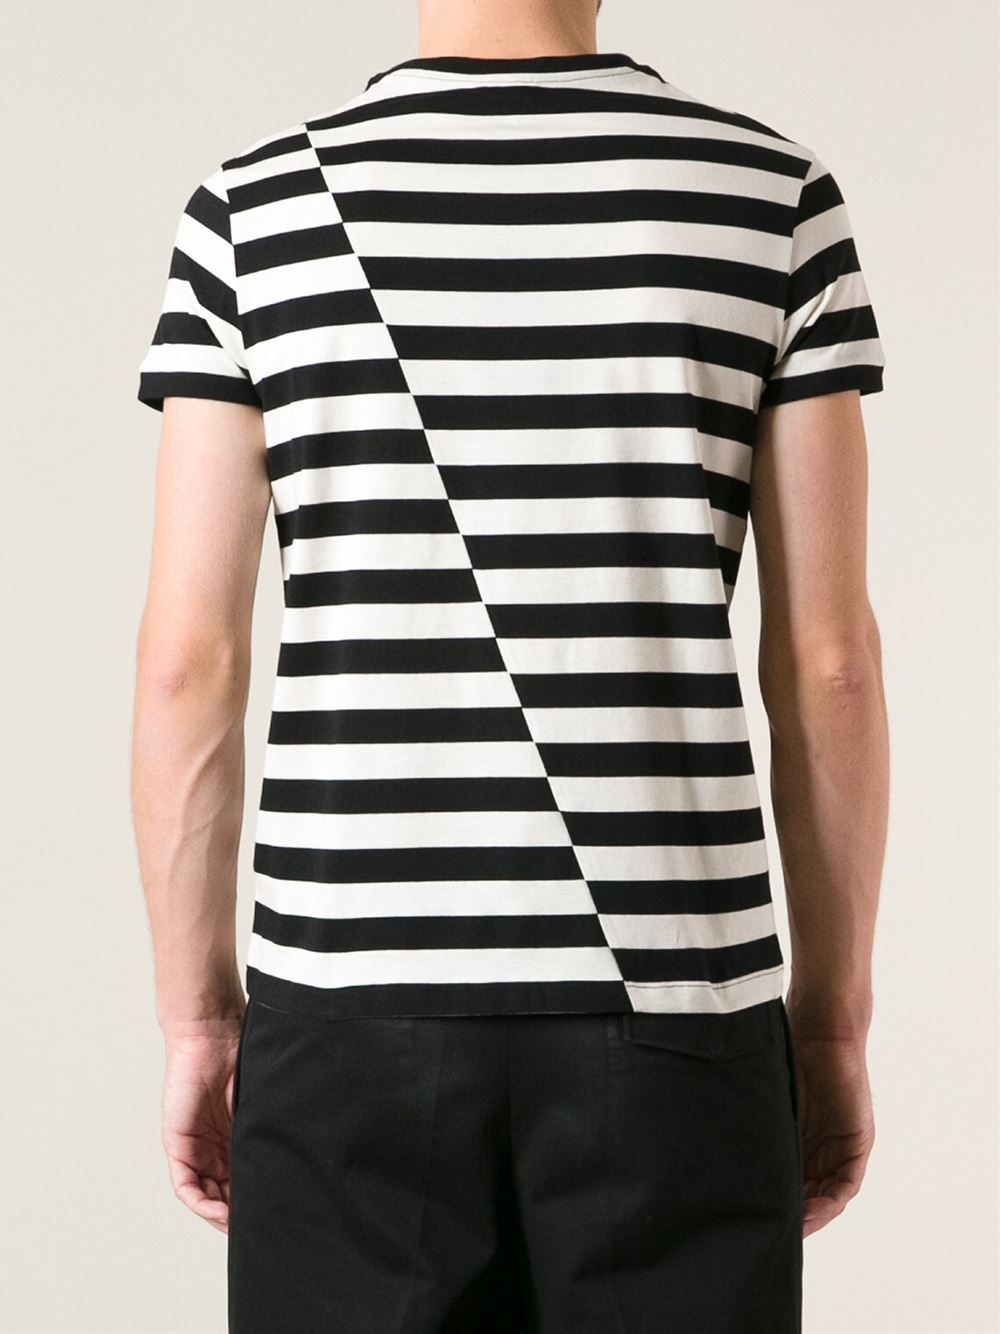 Saint Laurent Asymmetric Striped T-Shirt in Black for Men | Lyst